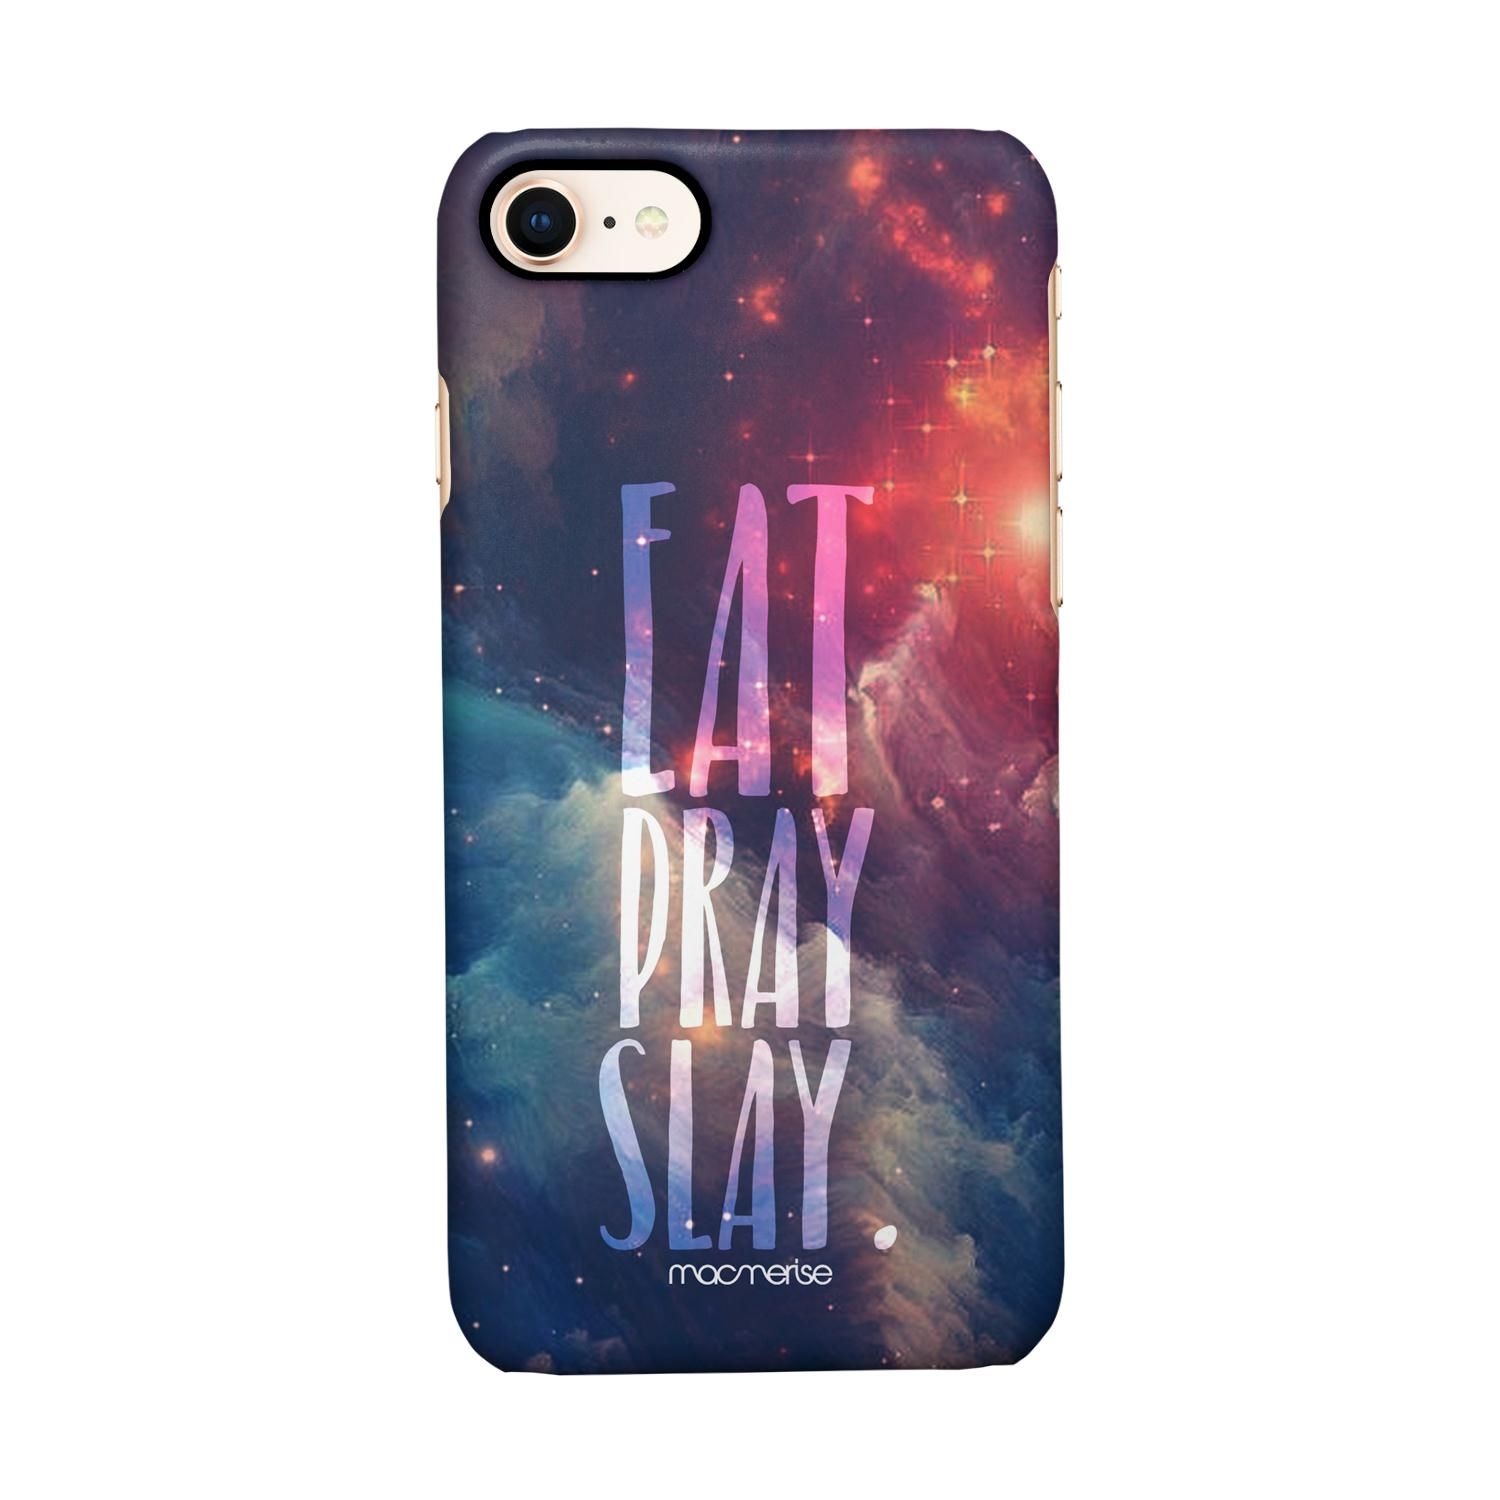 Buy Eat Pray Slay - Sleek Phone Case for iPhone 7 Online